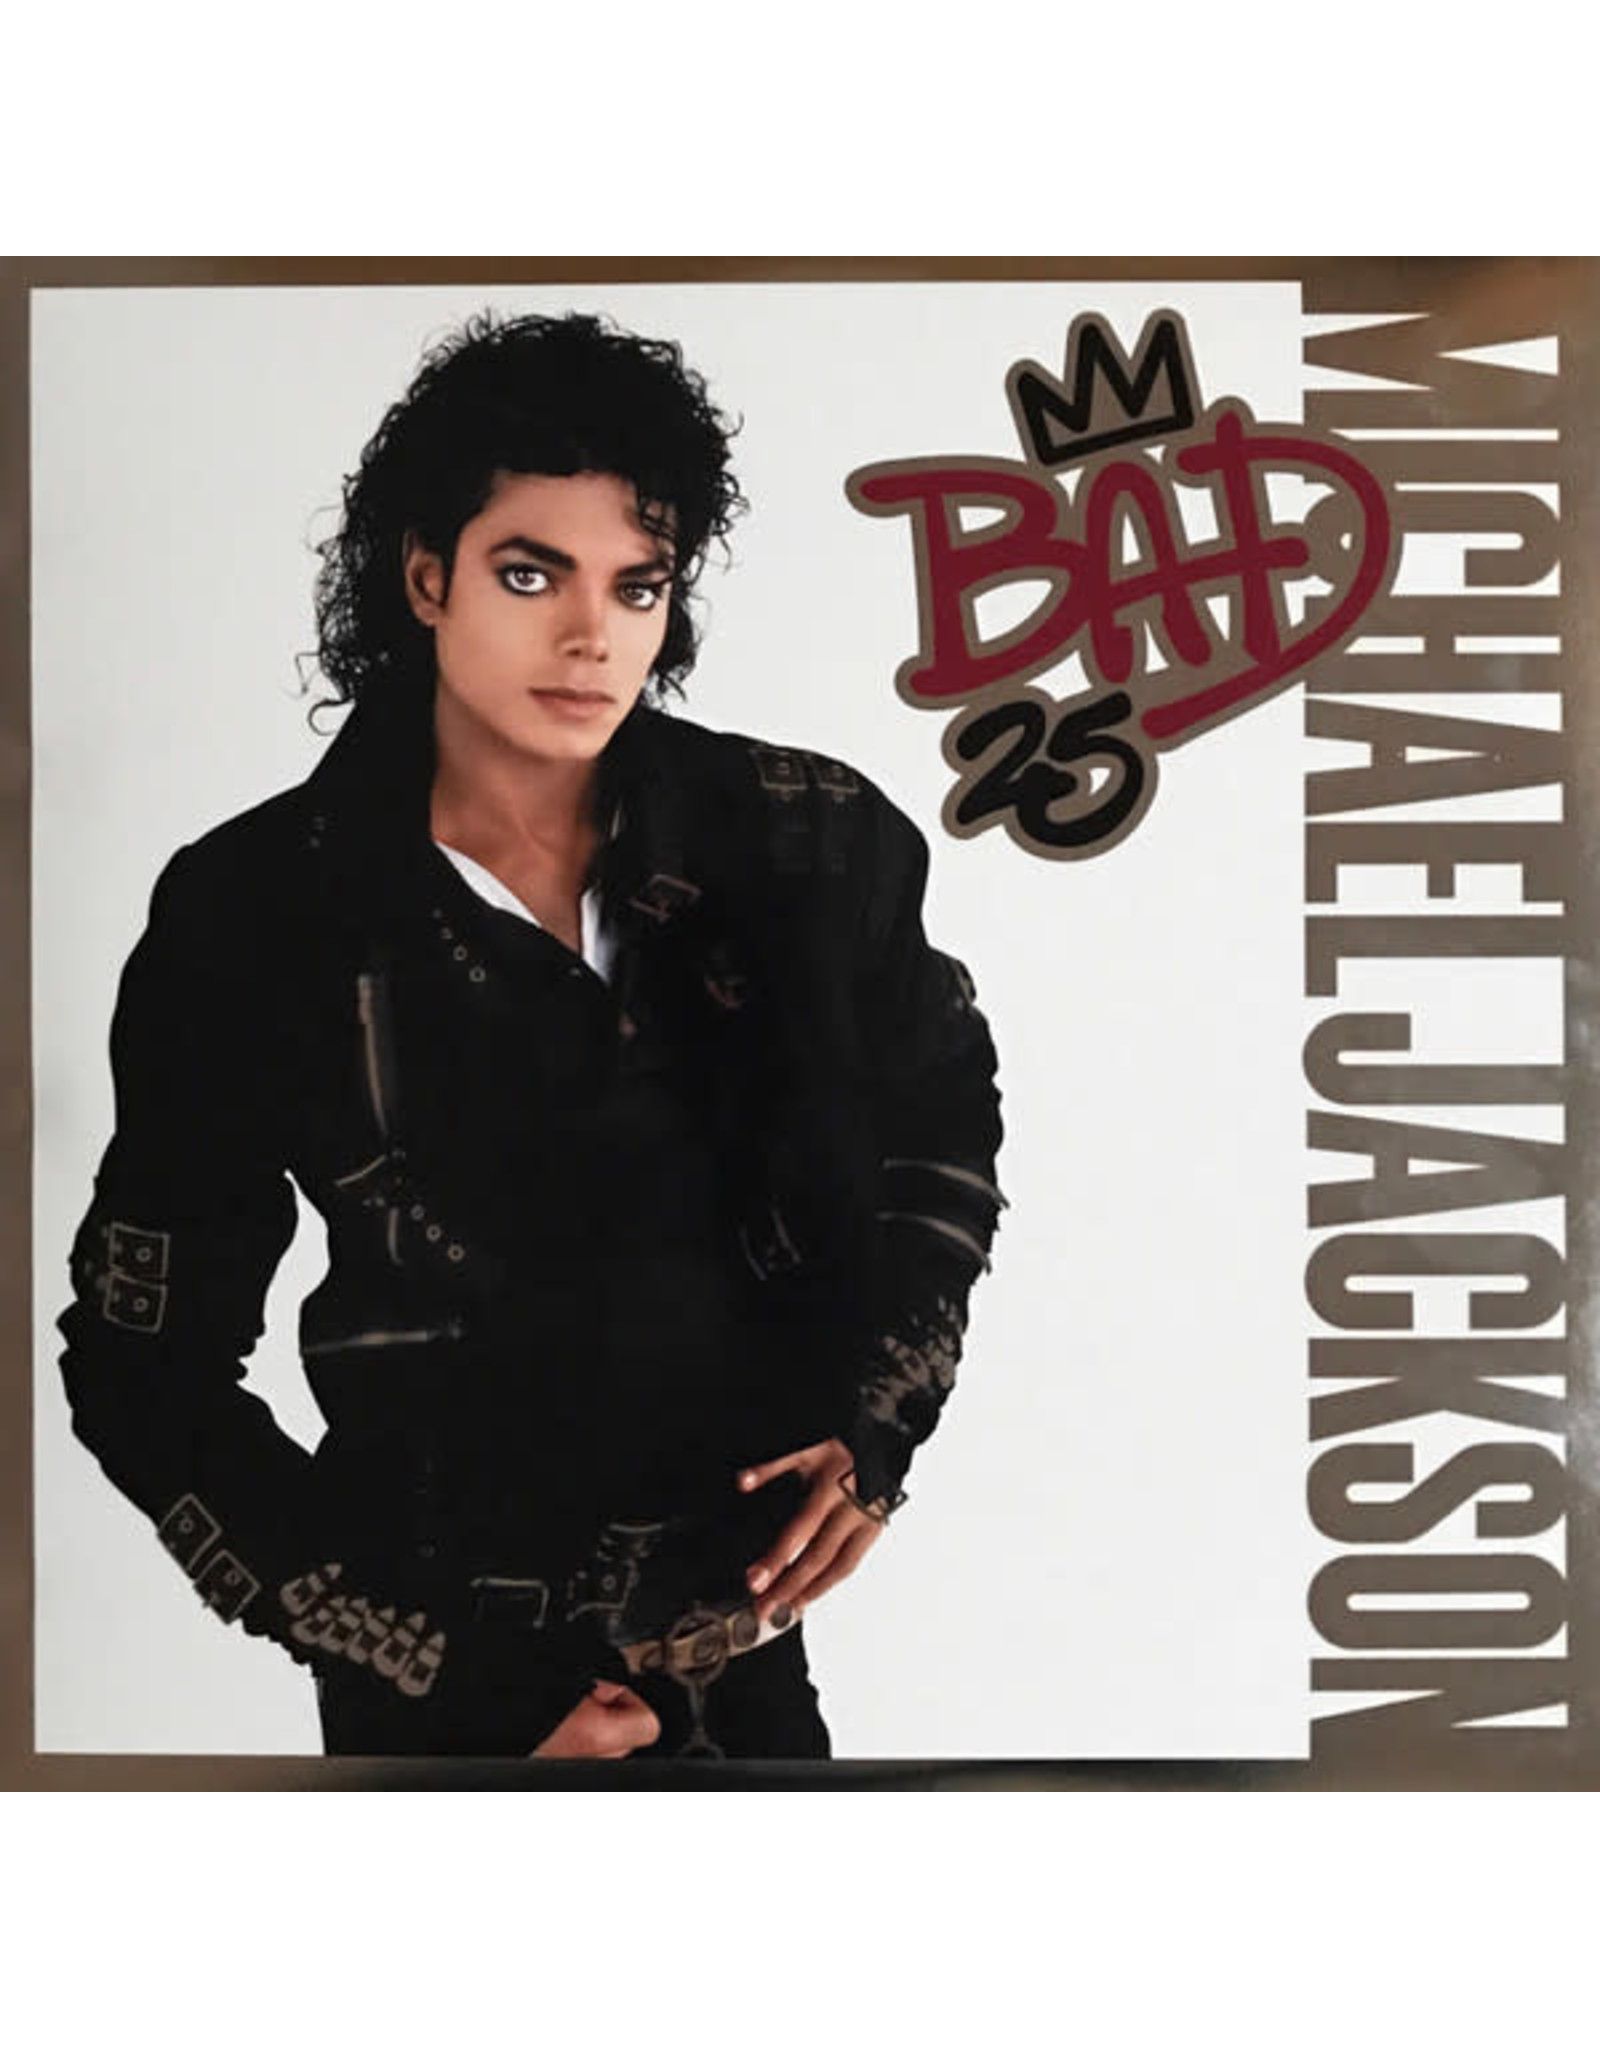 Michael Jackson - Thriller - 25th Anniversary Edition - RARE CD +